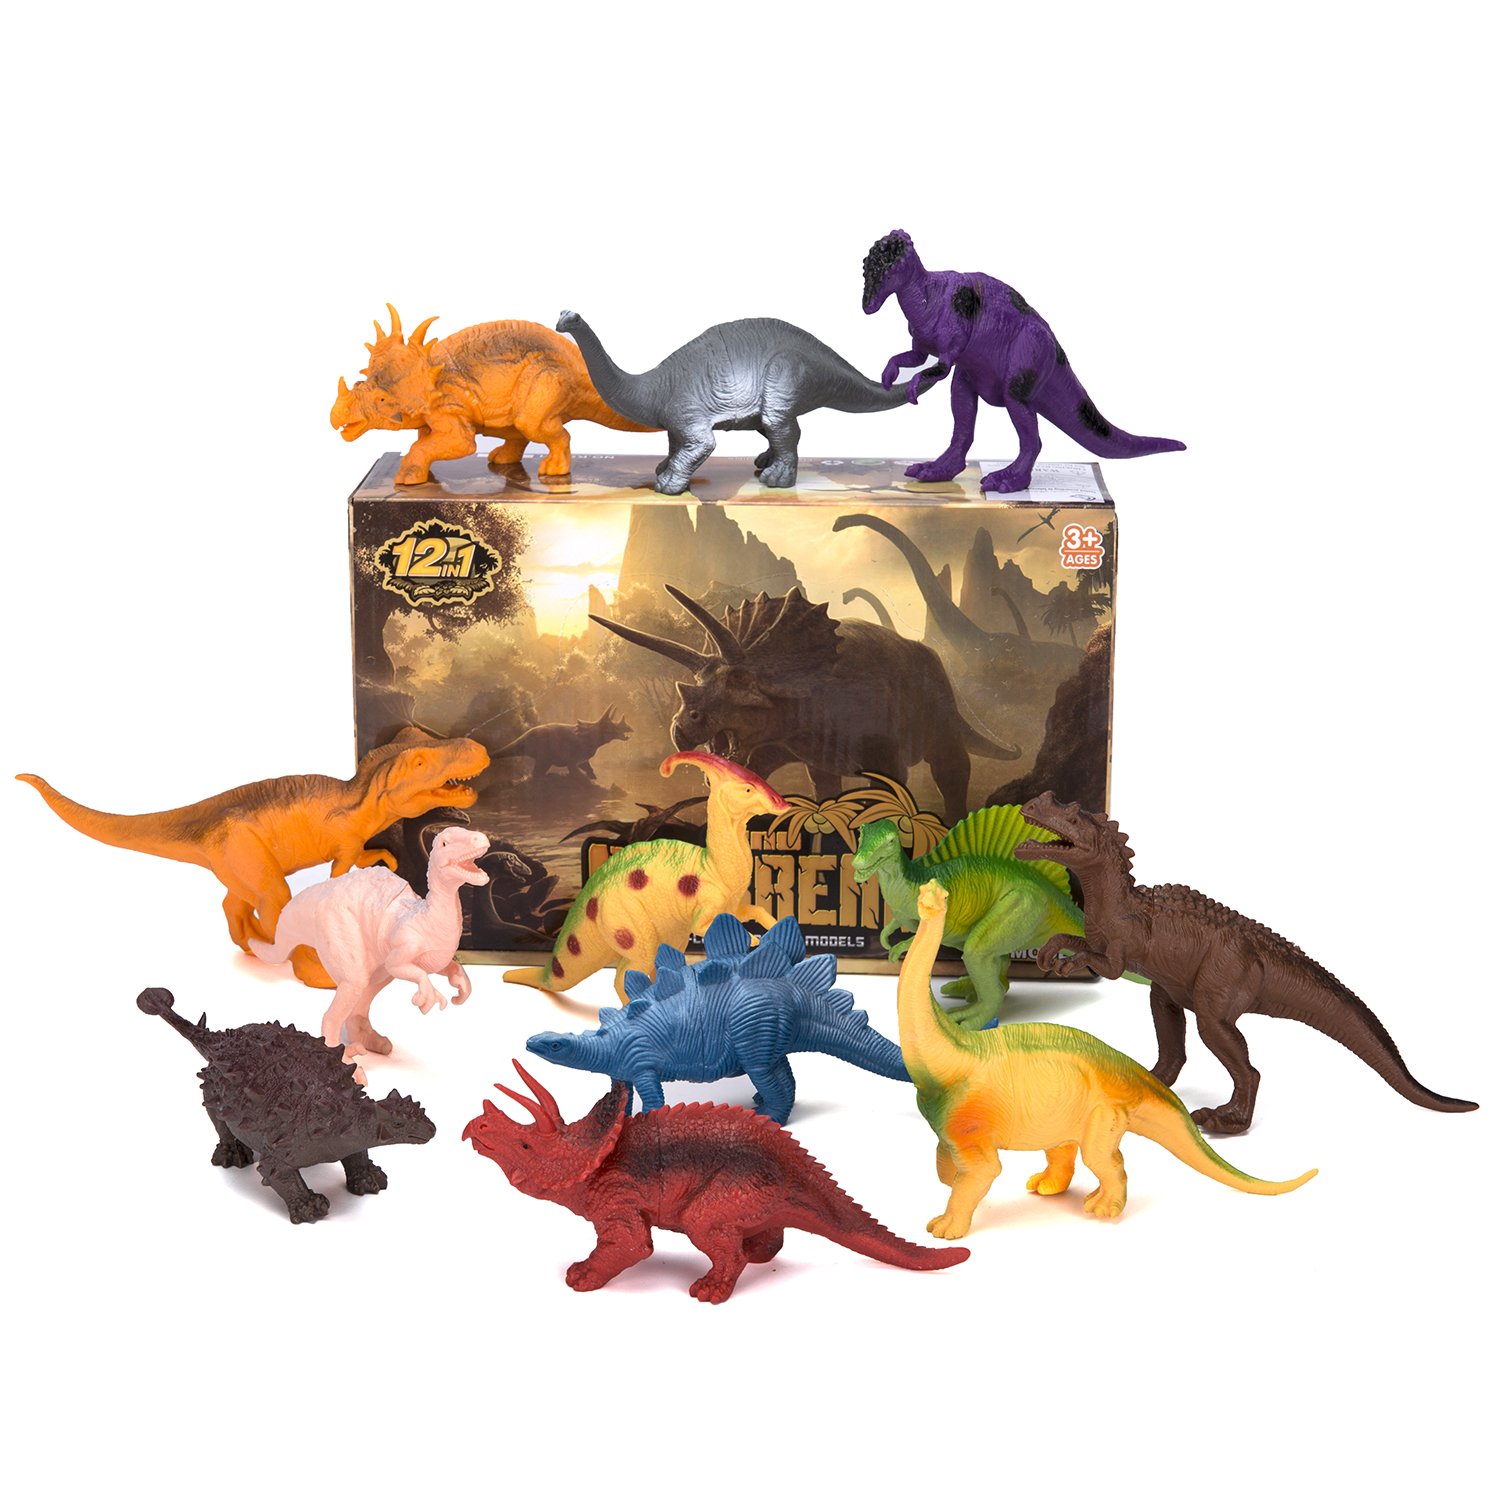 Kids Dinosaur Figures Toys, 7 Inch Jumbo Plastic Dinosaur Playset, STEM Educational Realistic Dinosaur Figurine for Boys Girls Toddlers Including T-Rex, Stegosaurus, Triceratops, Monoclonius, 12 Pack